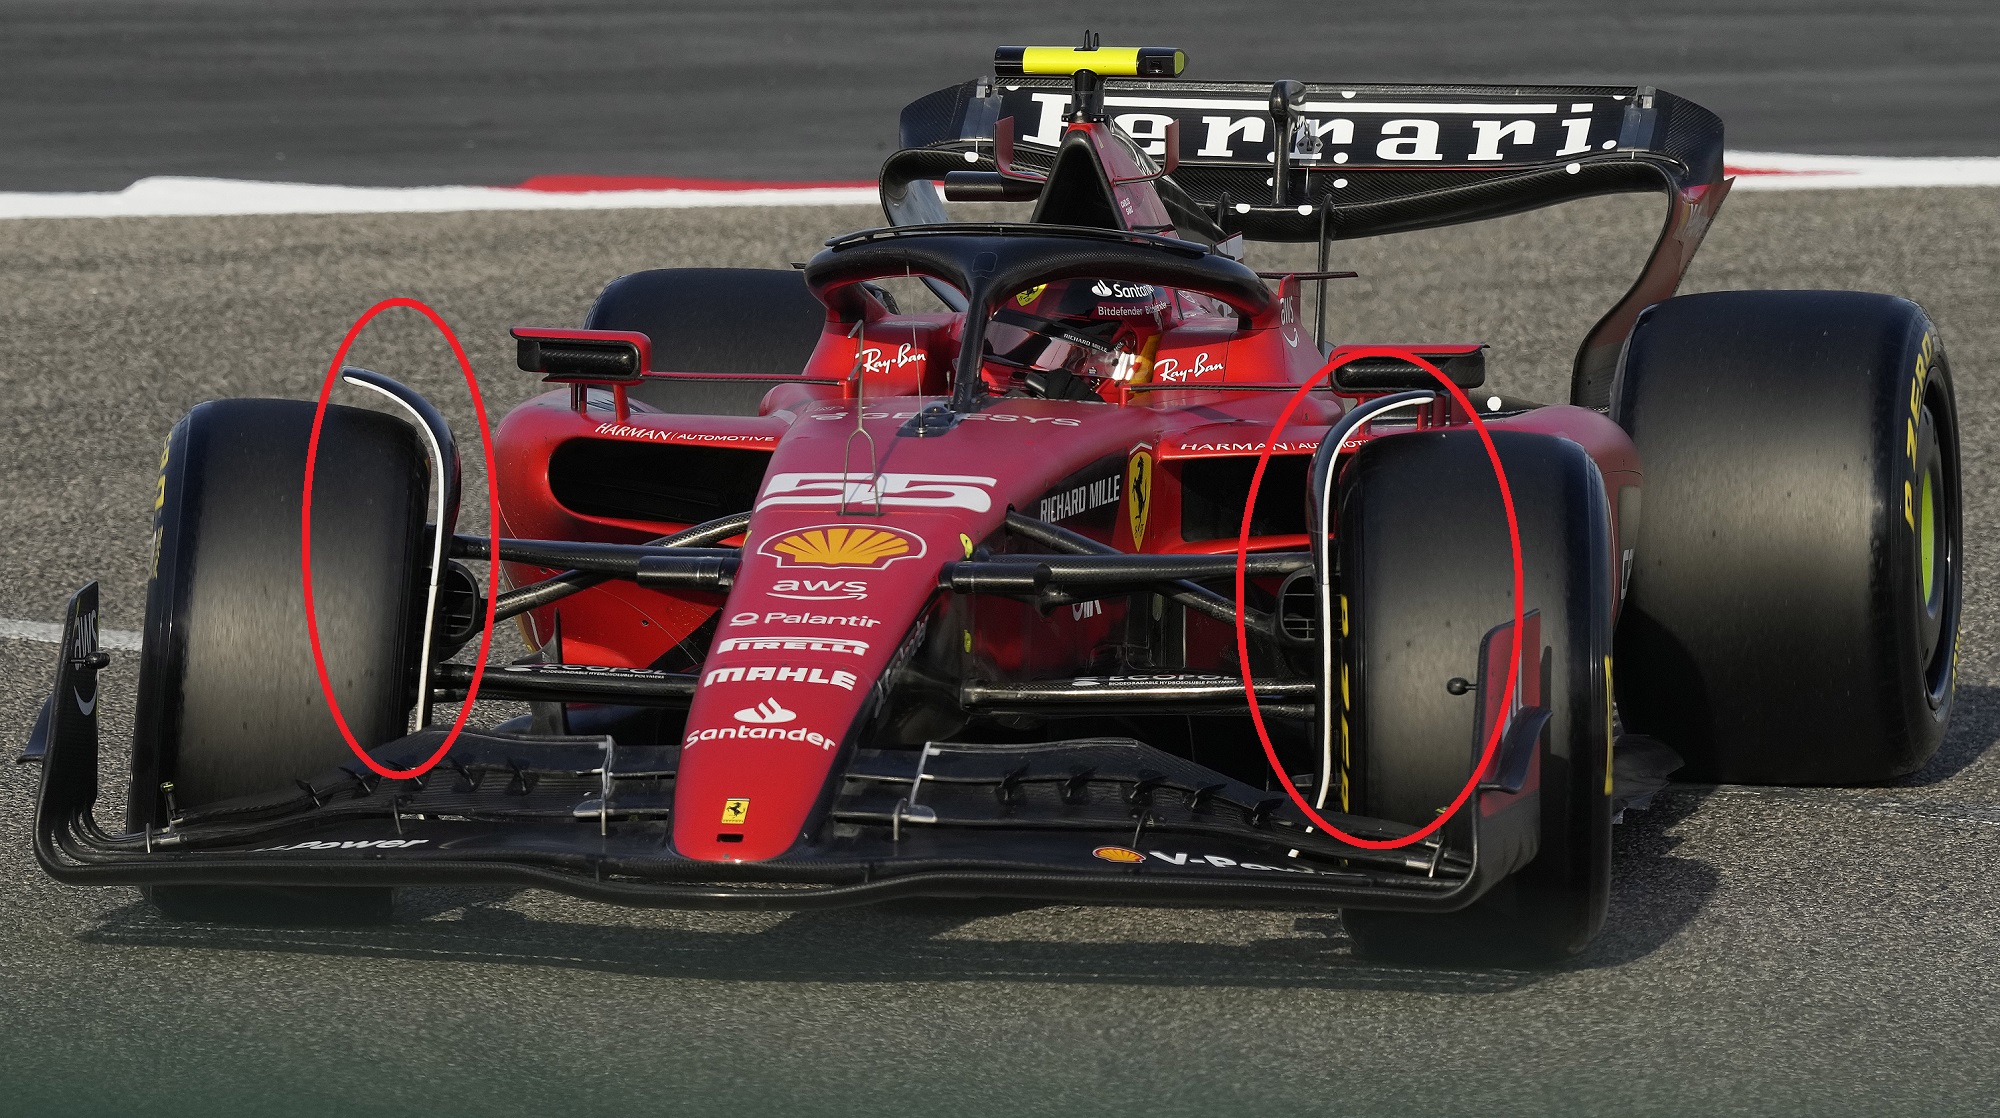 View of the winglets of Carlos Sainz's Ferrari.